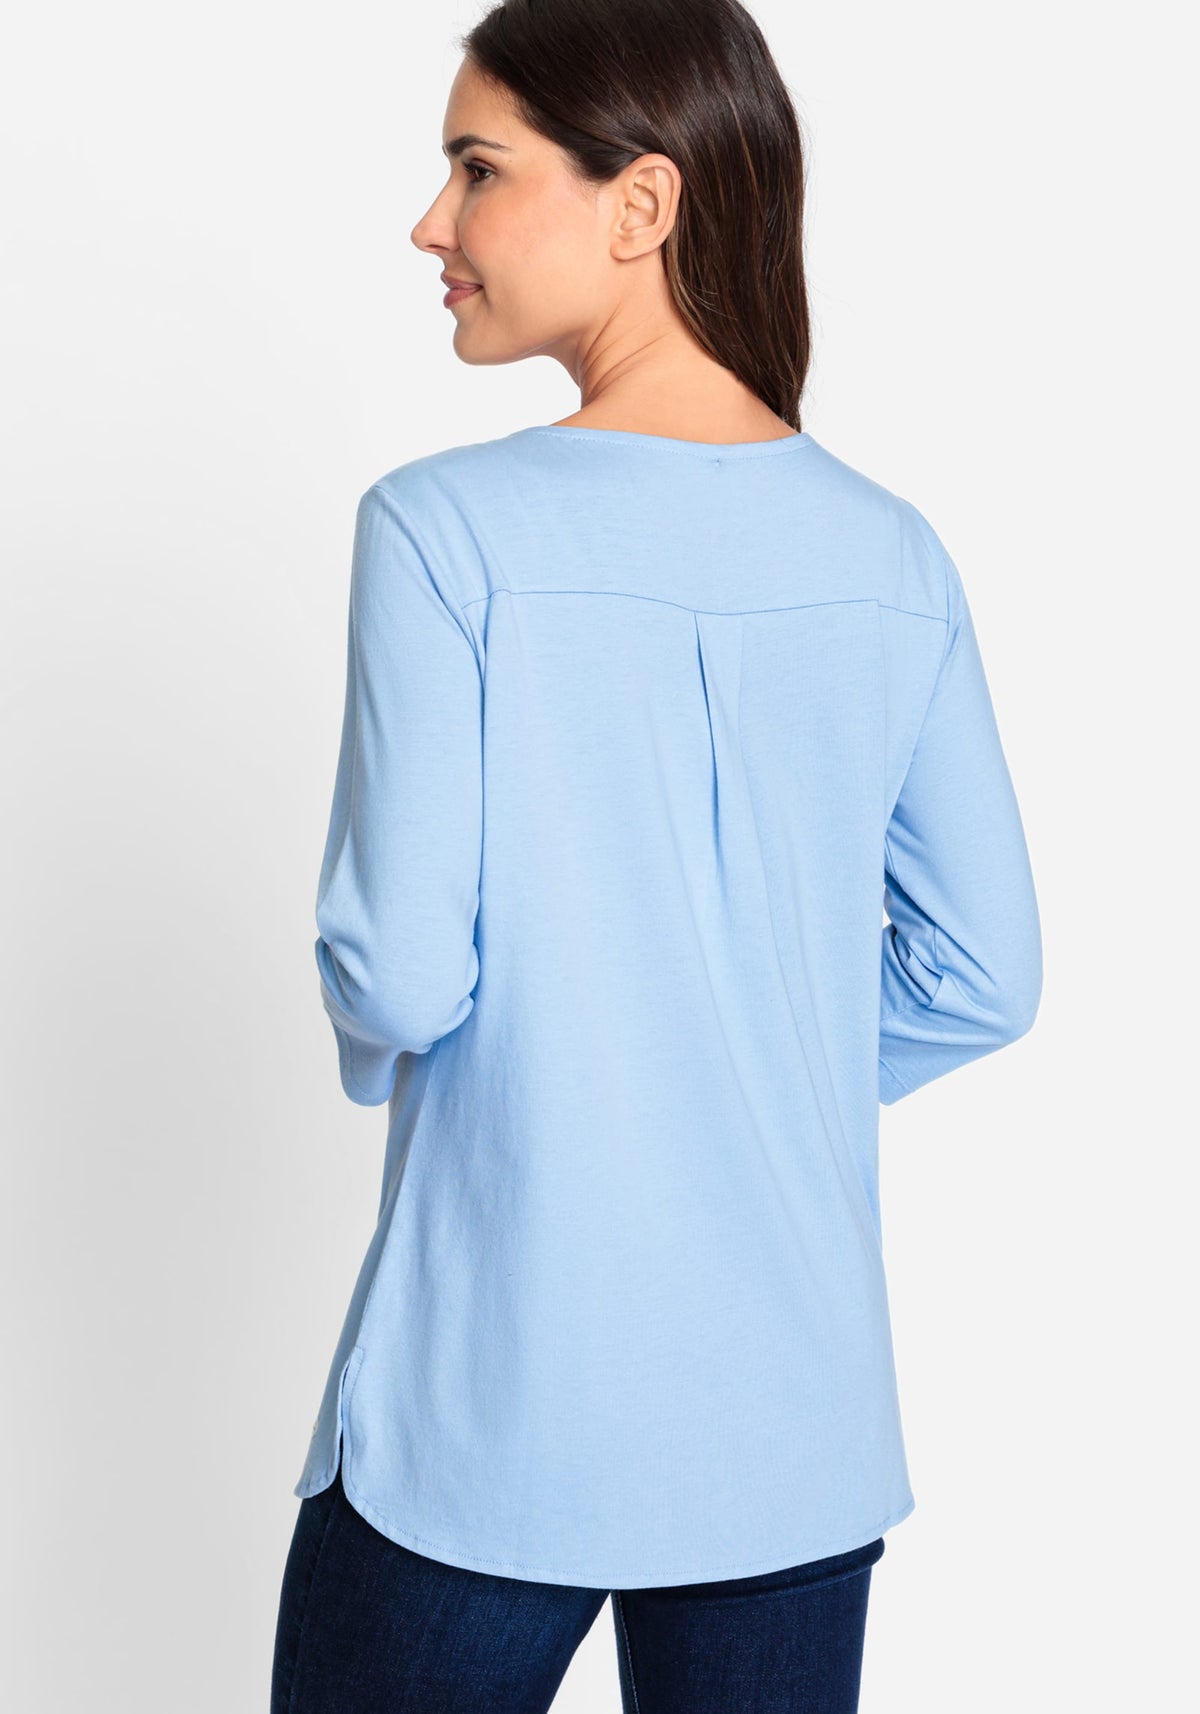 Cotton Blend 3/4 Sleeve Keyhole T-Shirt containing TENCEL™ Modal